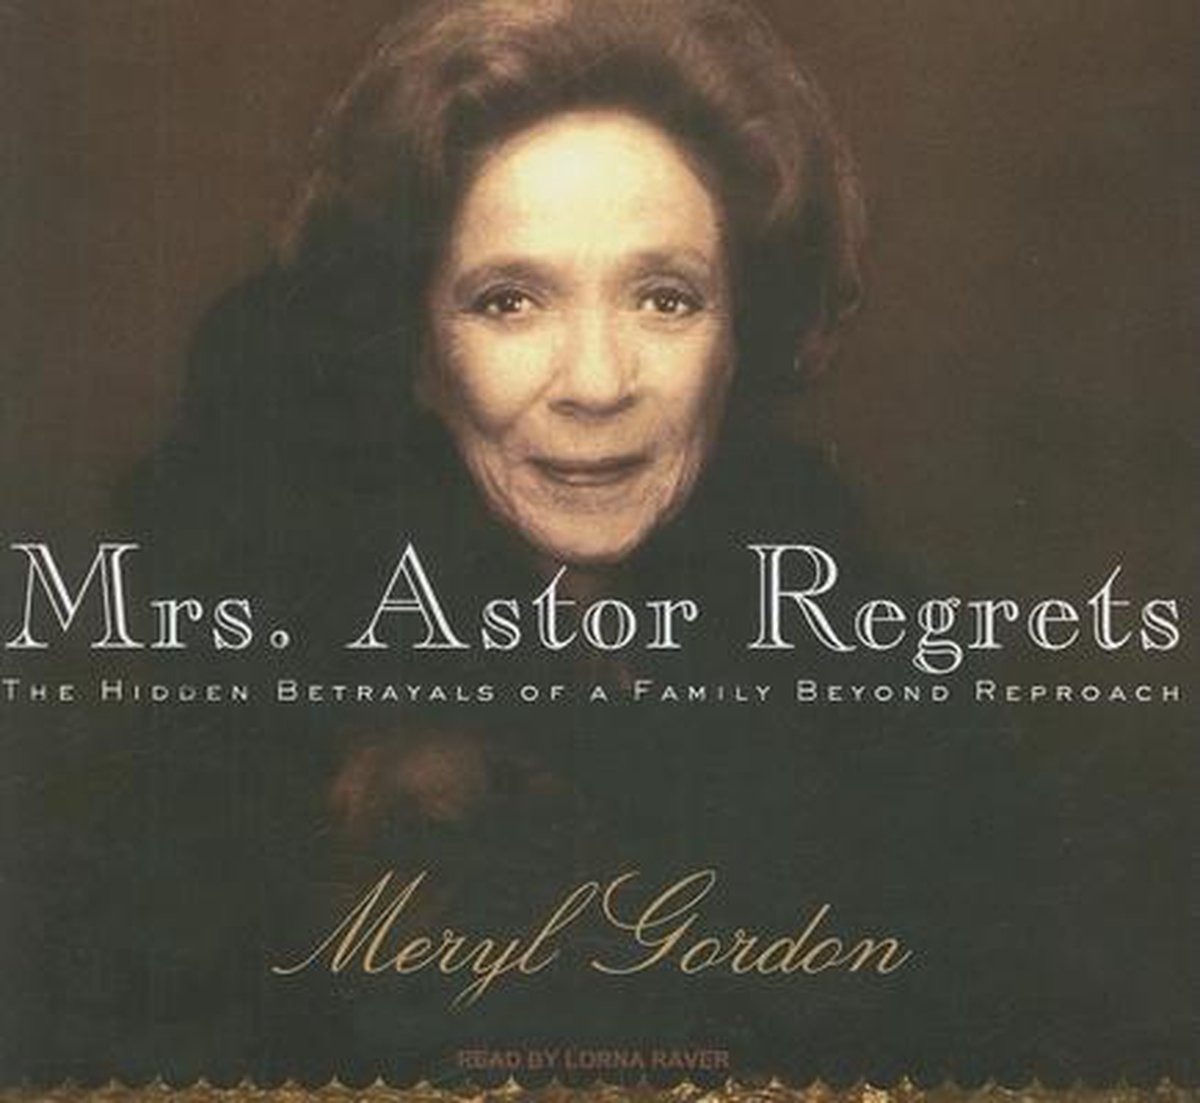 mrs astor regrets by meryl gordon